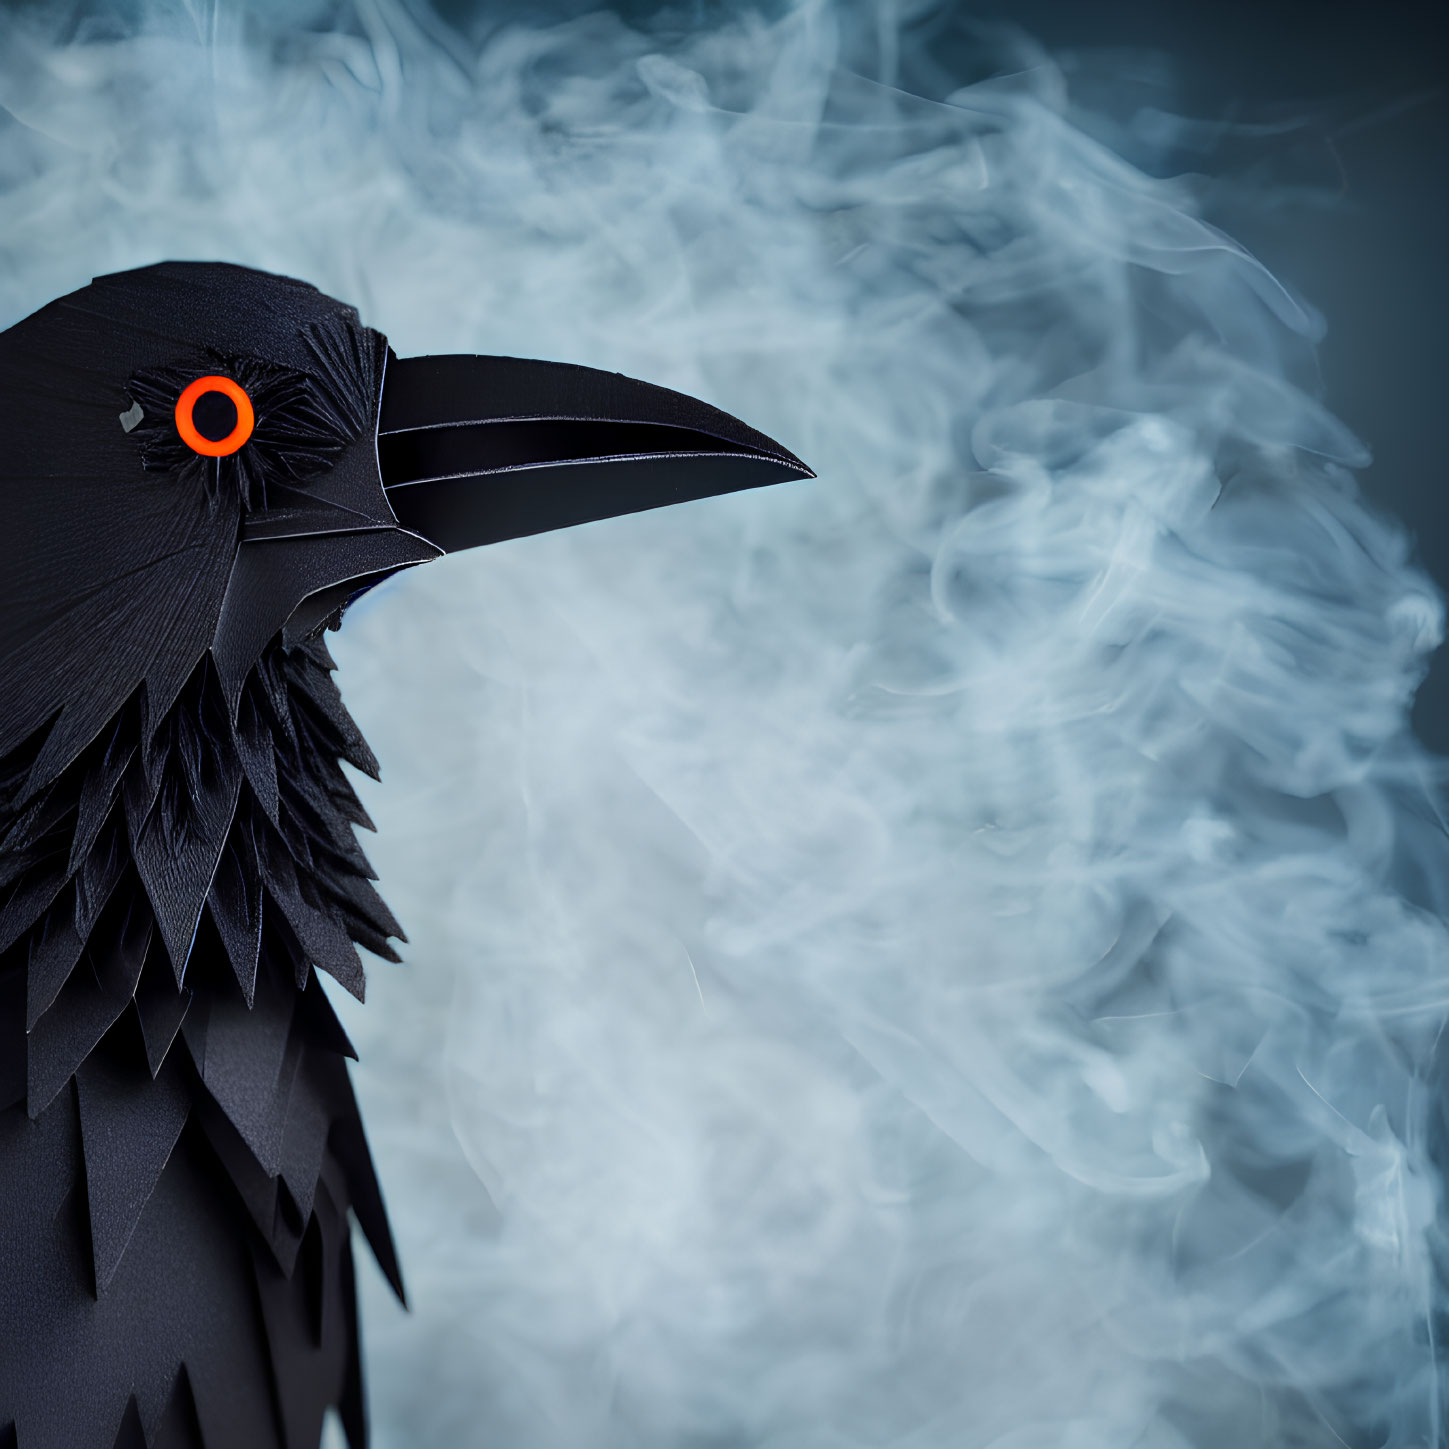 Stylized black raven sculpture with orange eye on blue background